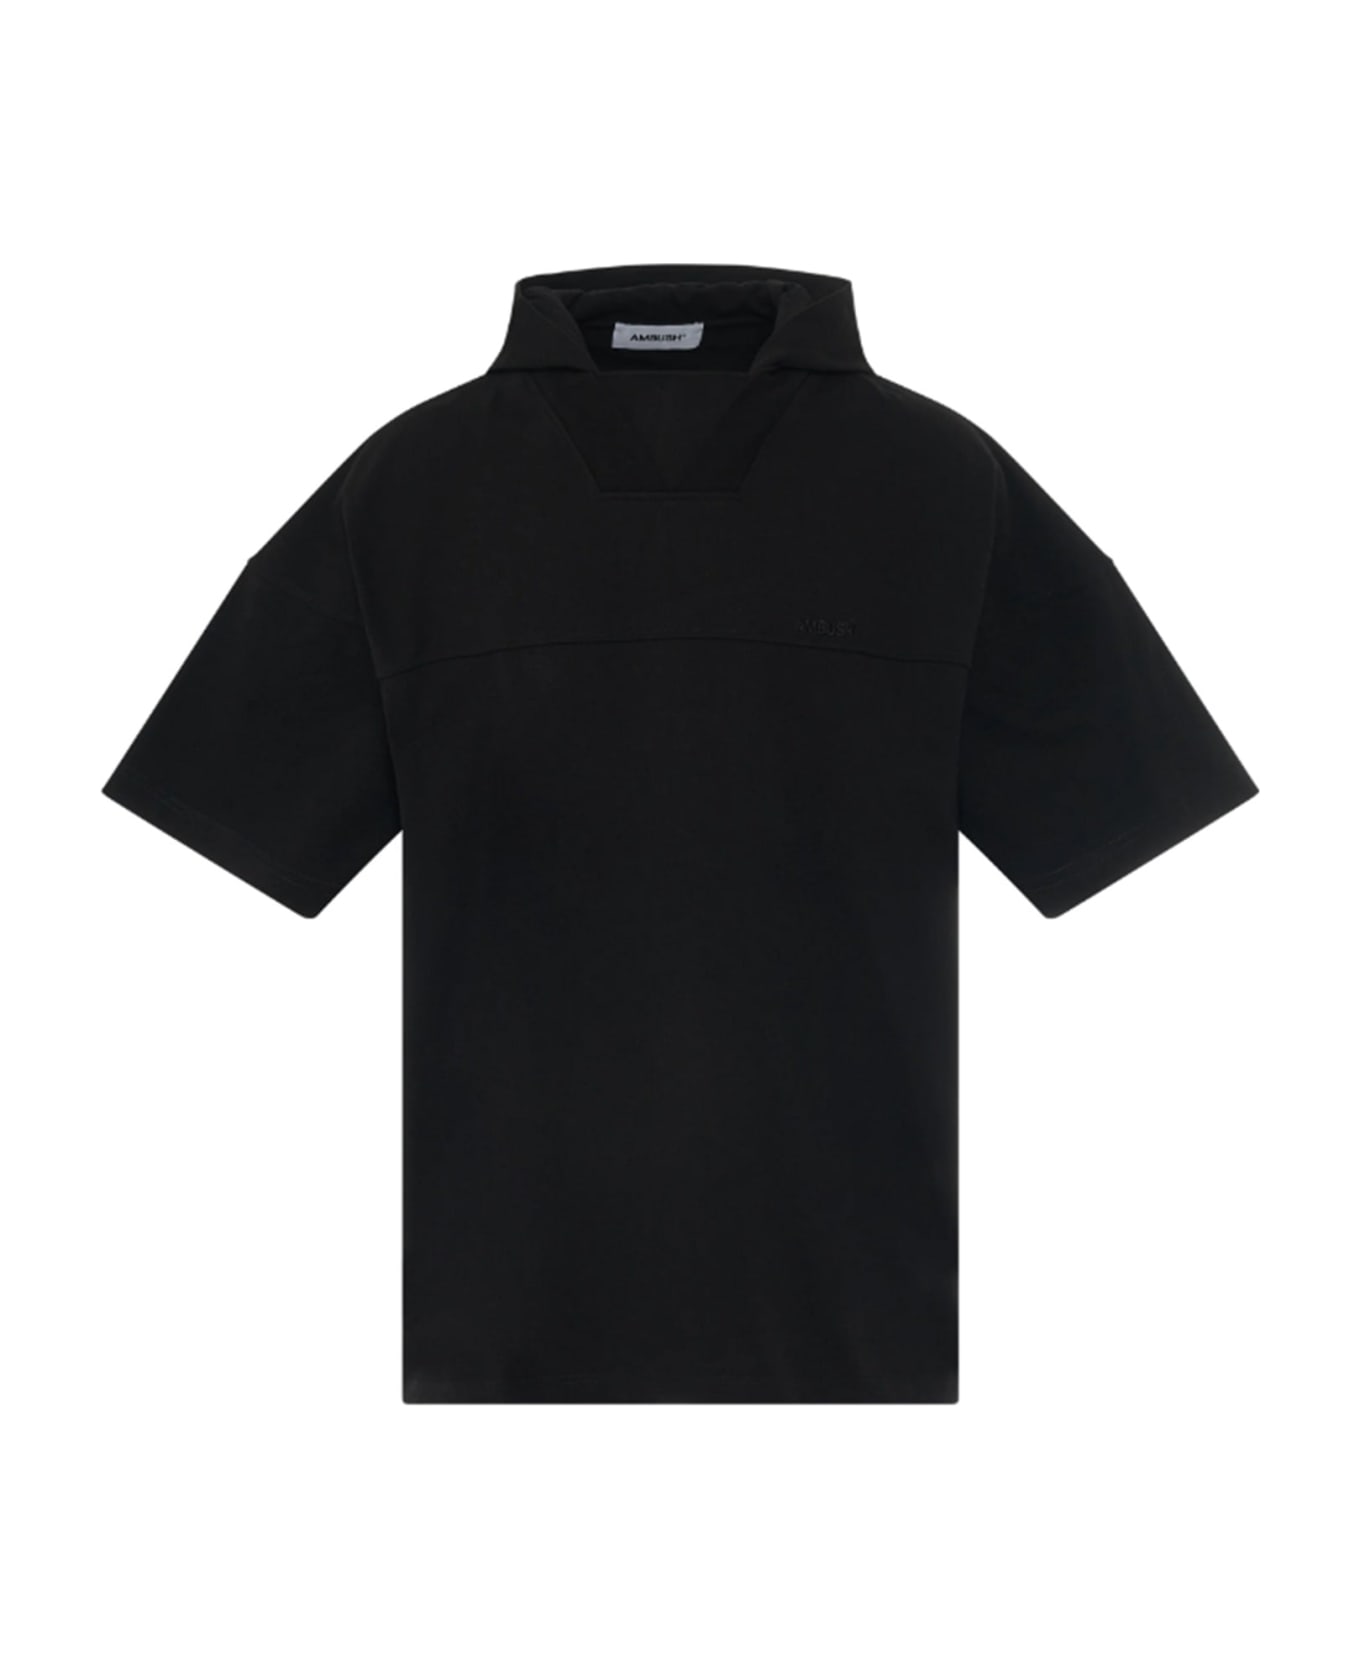 AMBUSH Sweatshirt - Black ポロシャツ